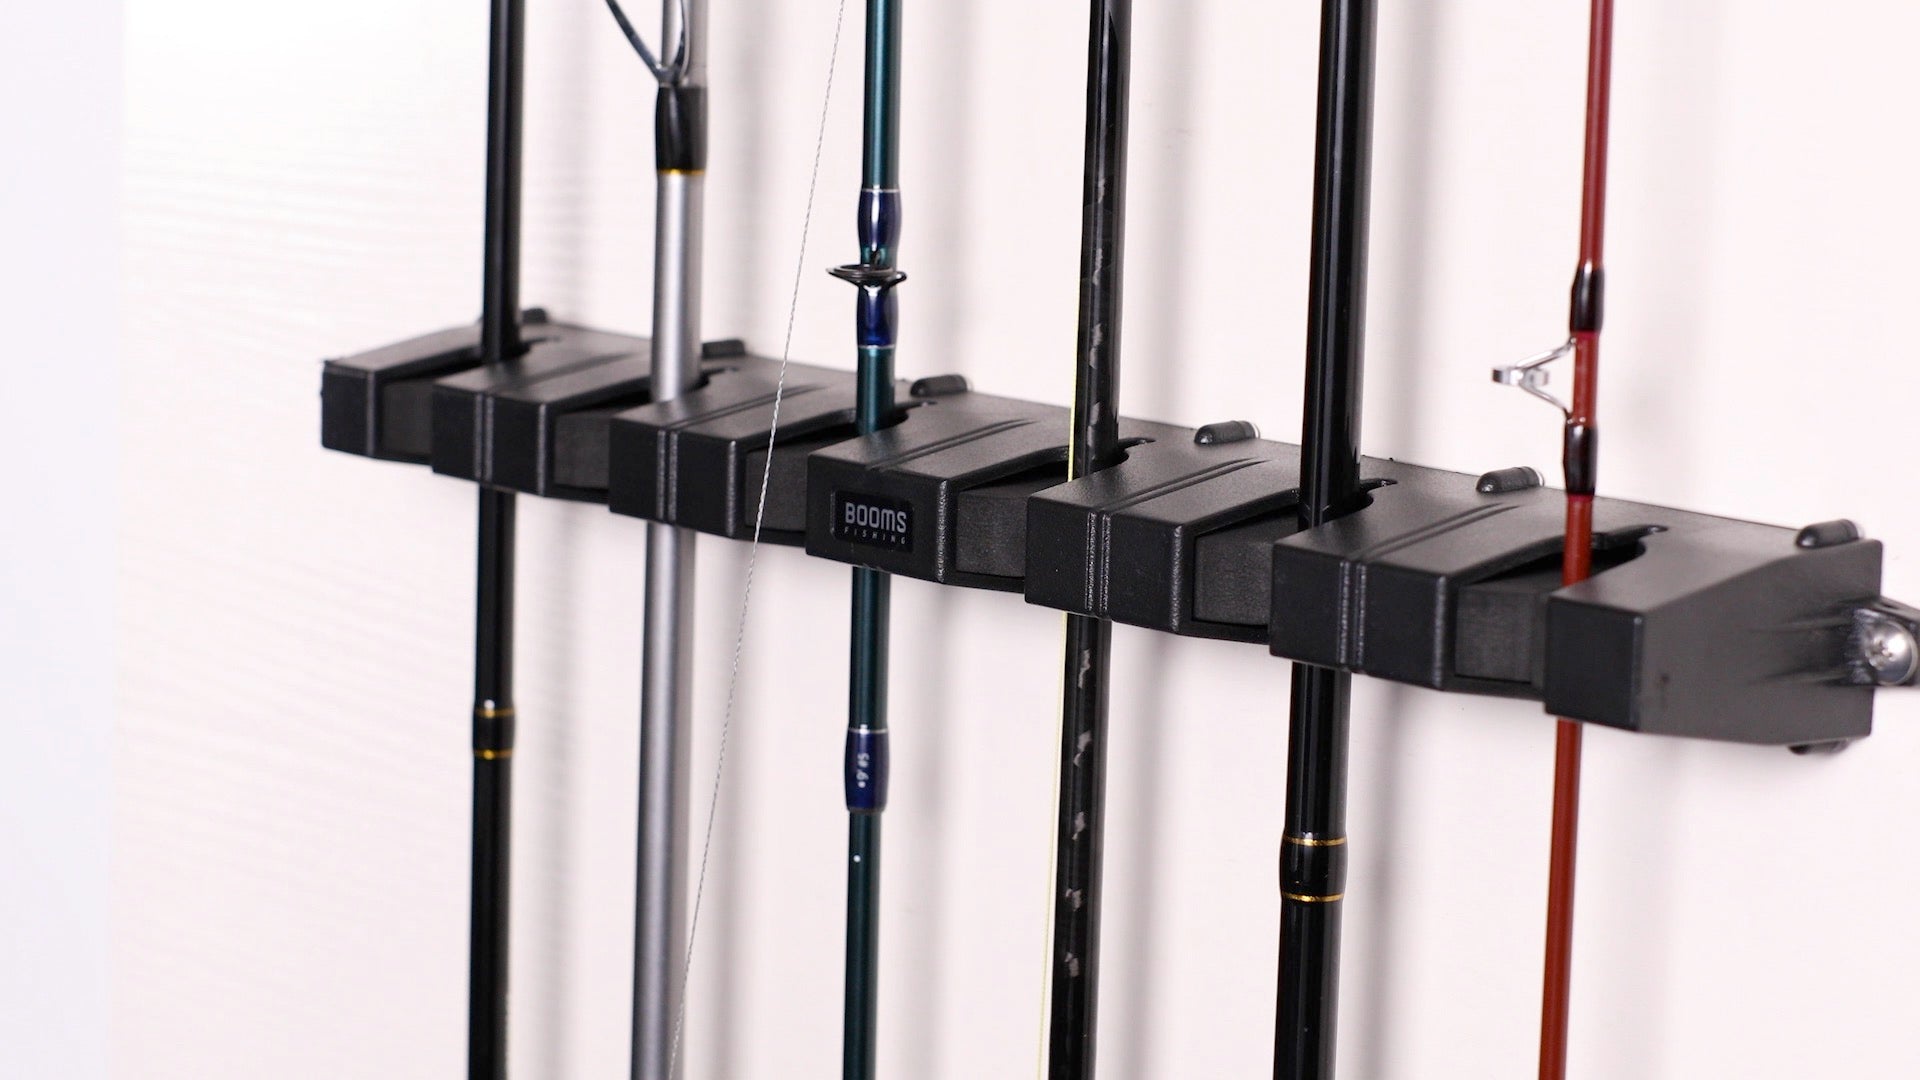 E-jades Fishing Pole Holders For Garage Wall Hanging-2 Pack Vertical  Fishing Rod Holders For Garage Wall Mount,Holds Up To 12 Rods,Fishing Gifts  For